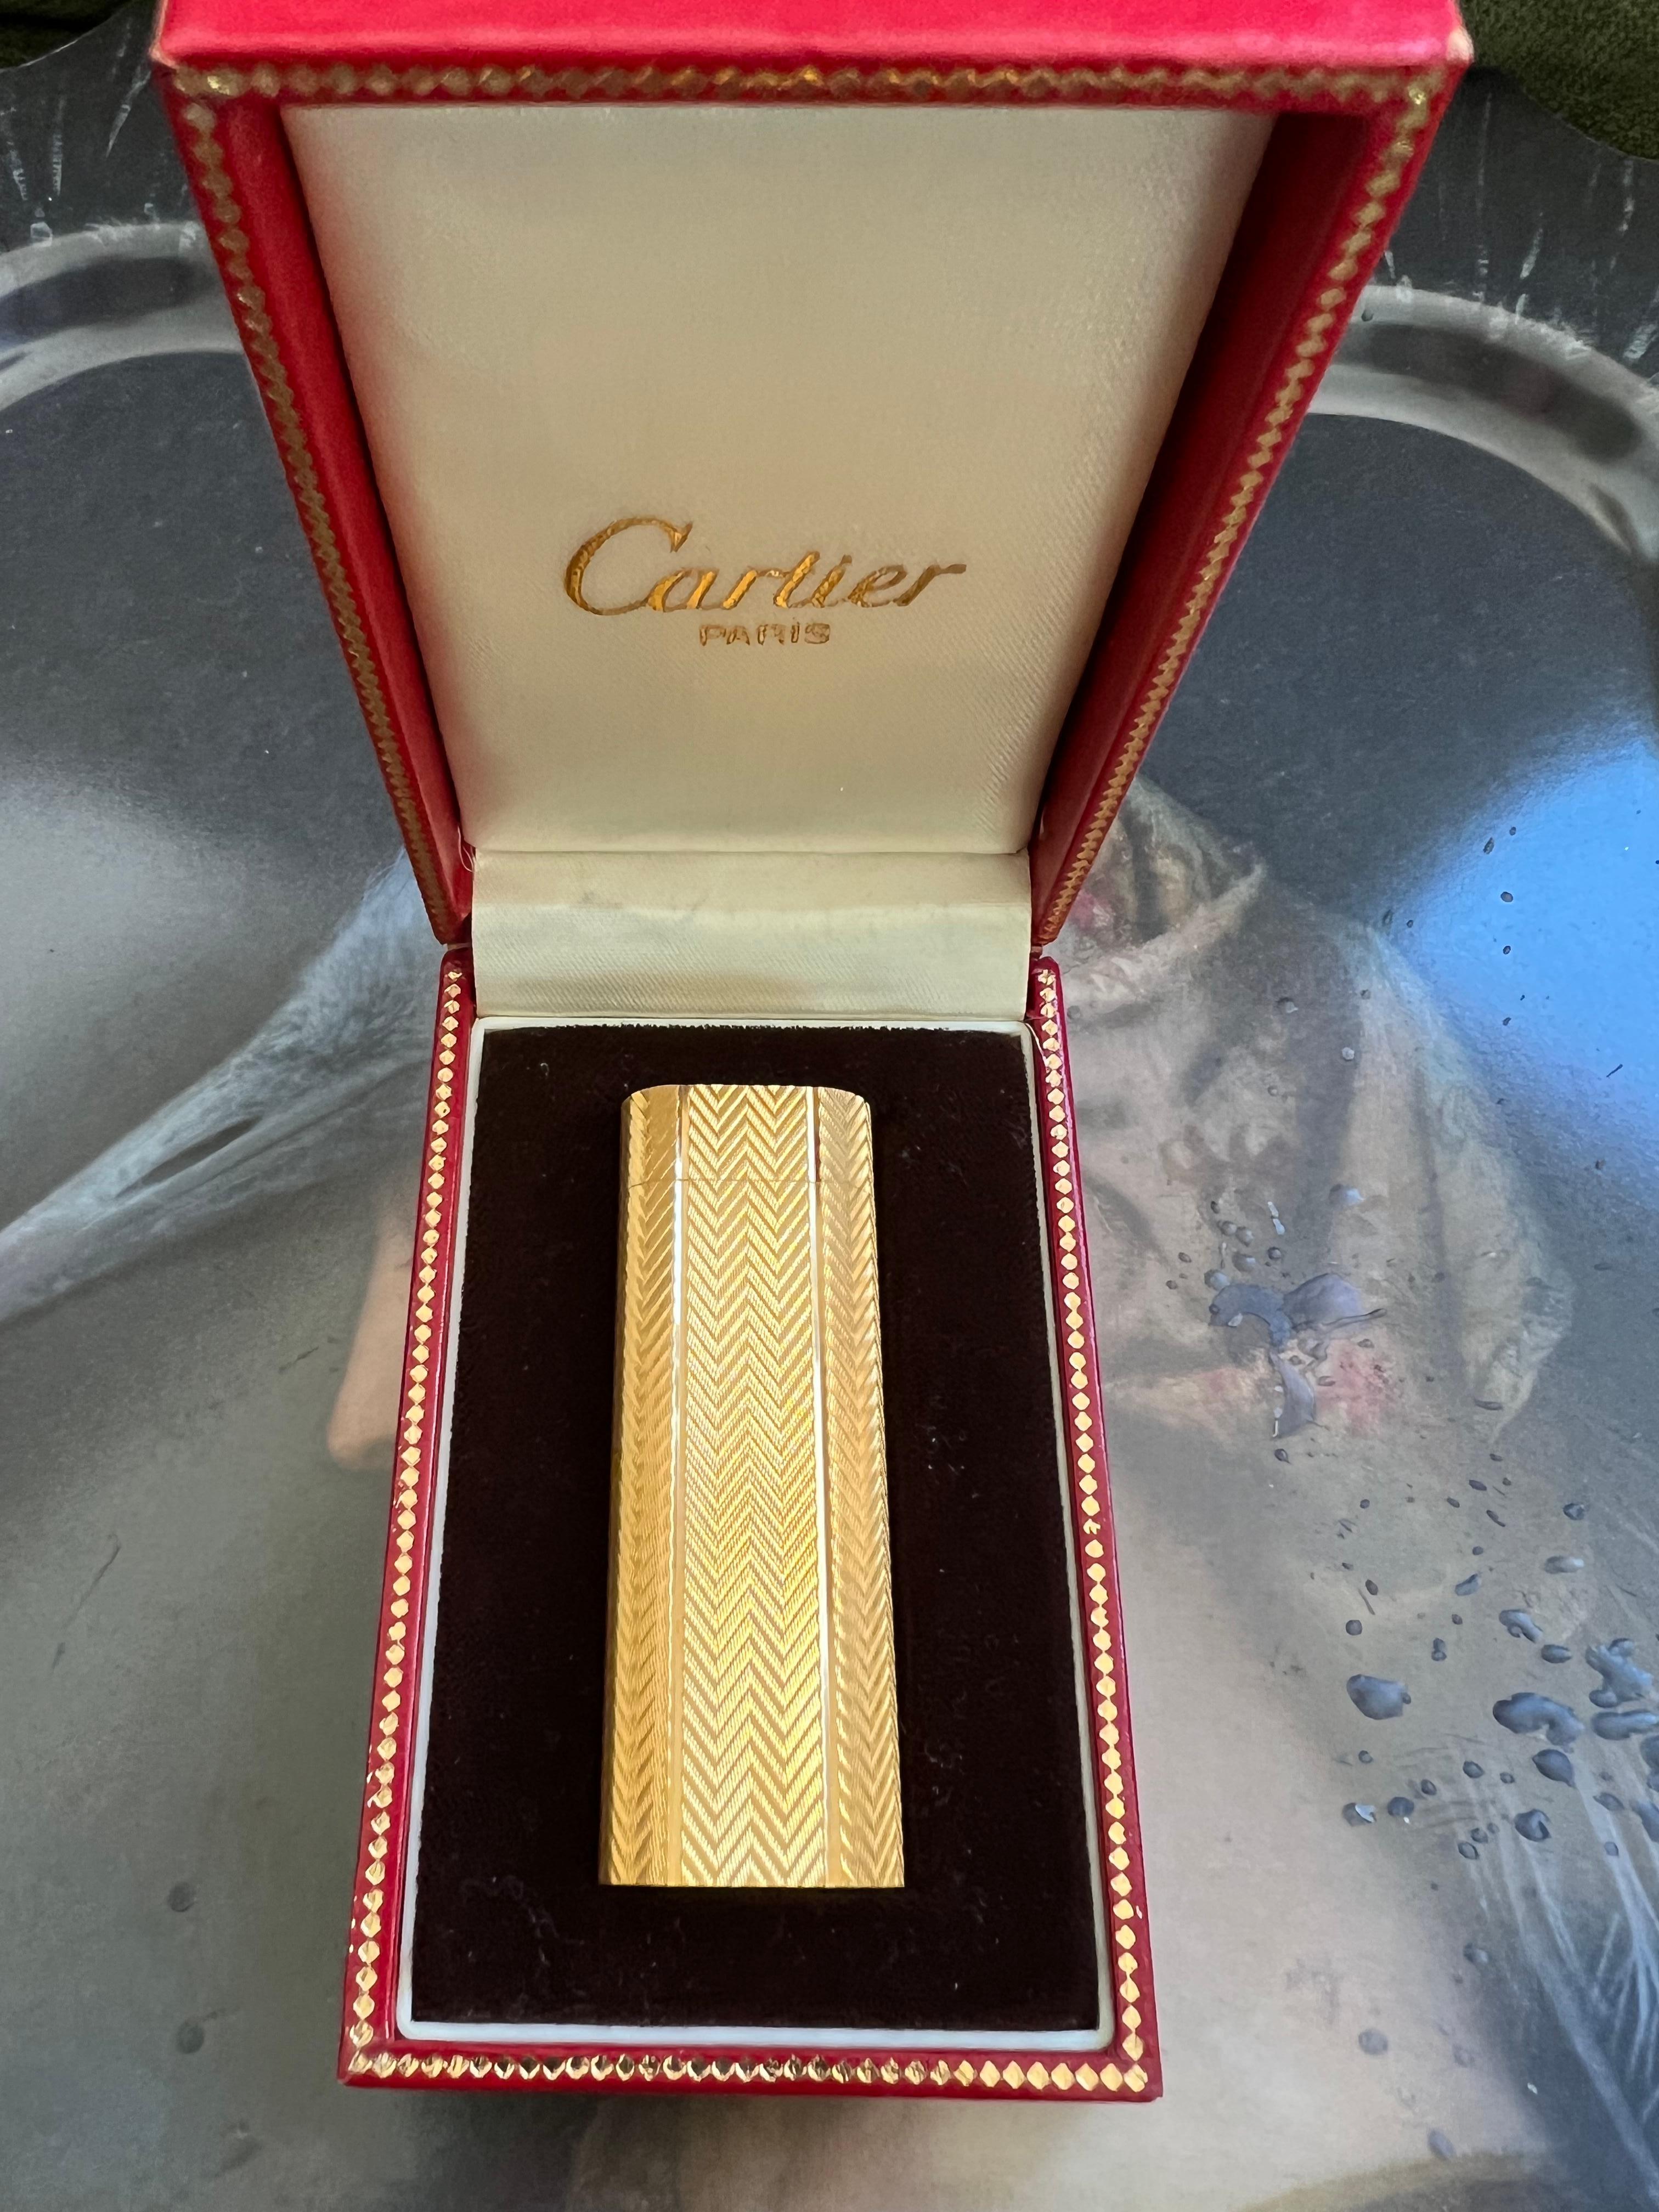 A Les Must De Cartier Paris 18k gold plated lighter 2